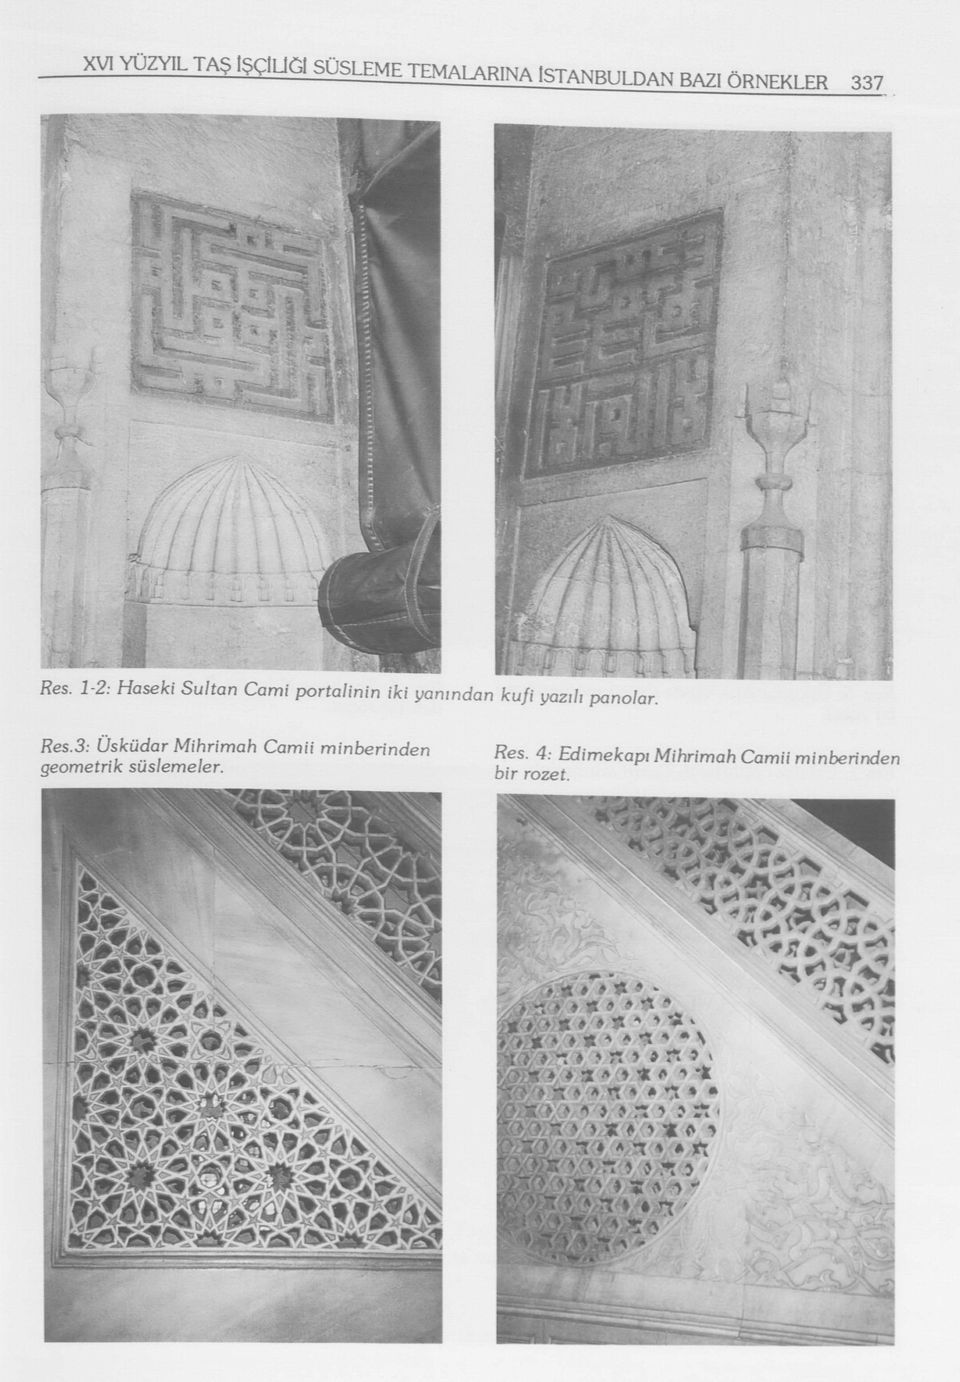 Res.3: Üsküdar Mihrimah Camii geometrik süslemeler. minberinden Res.